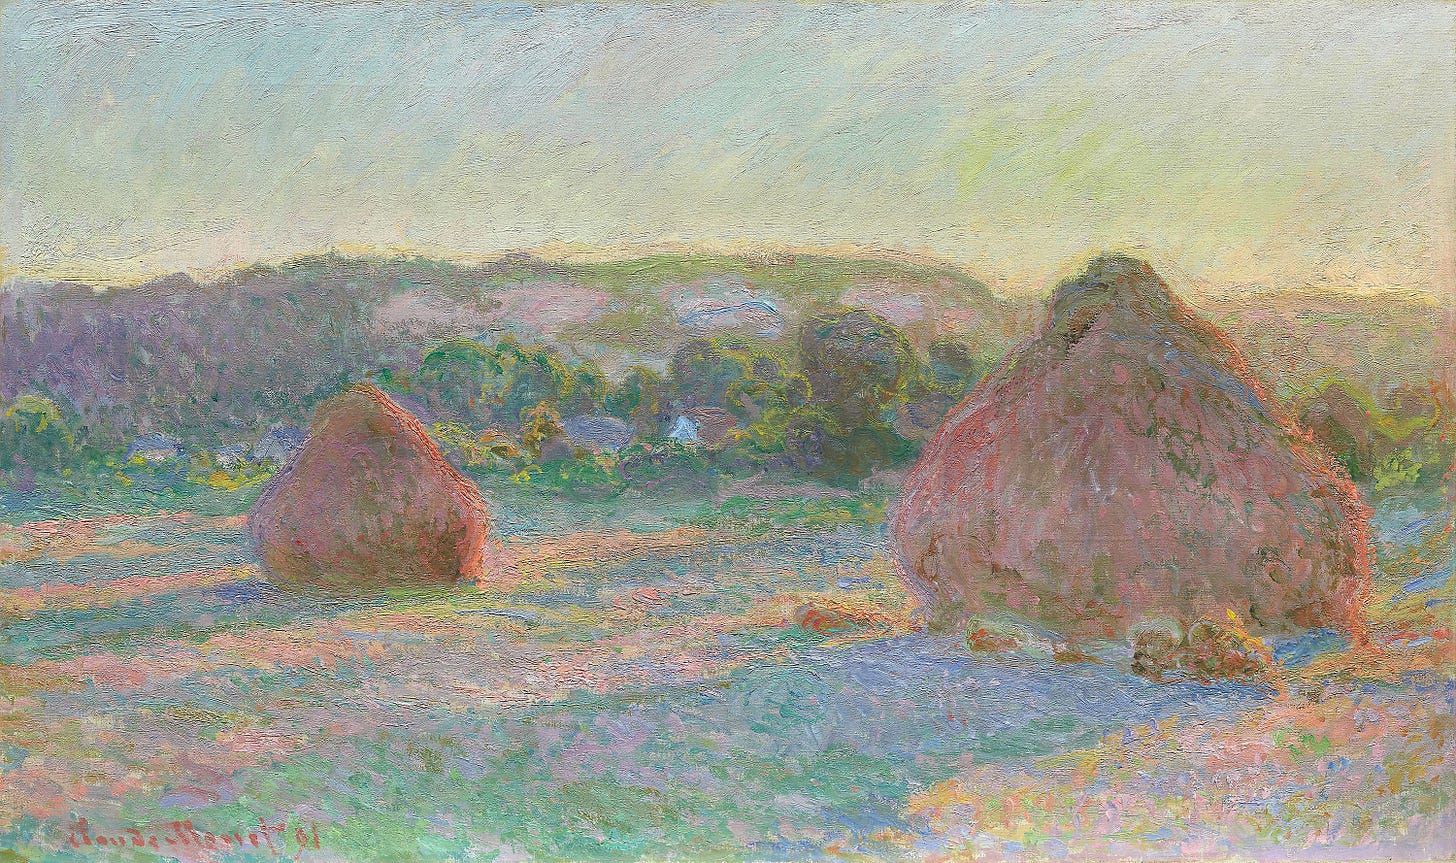 Haystacks (Monet series) - Wikipedia